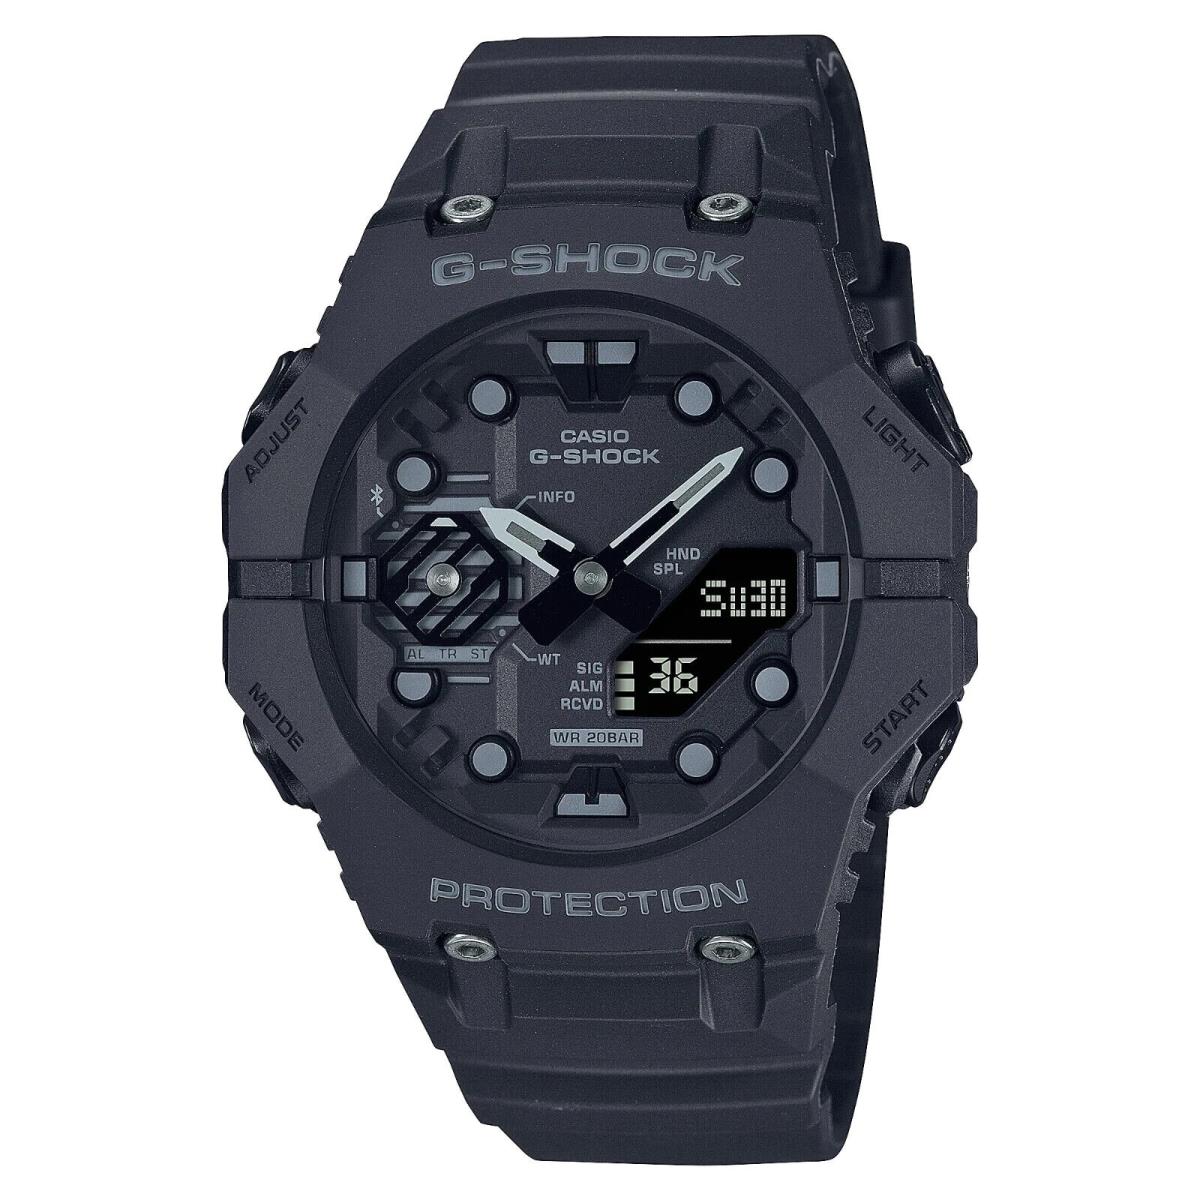 Casio G-shock Ana-digital Transparent Black Resin Strap Watch GAB001-1A